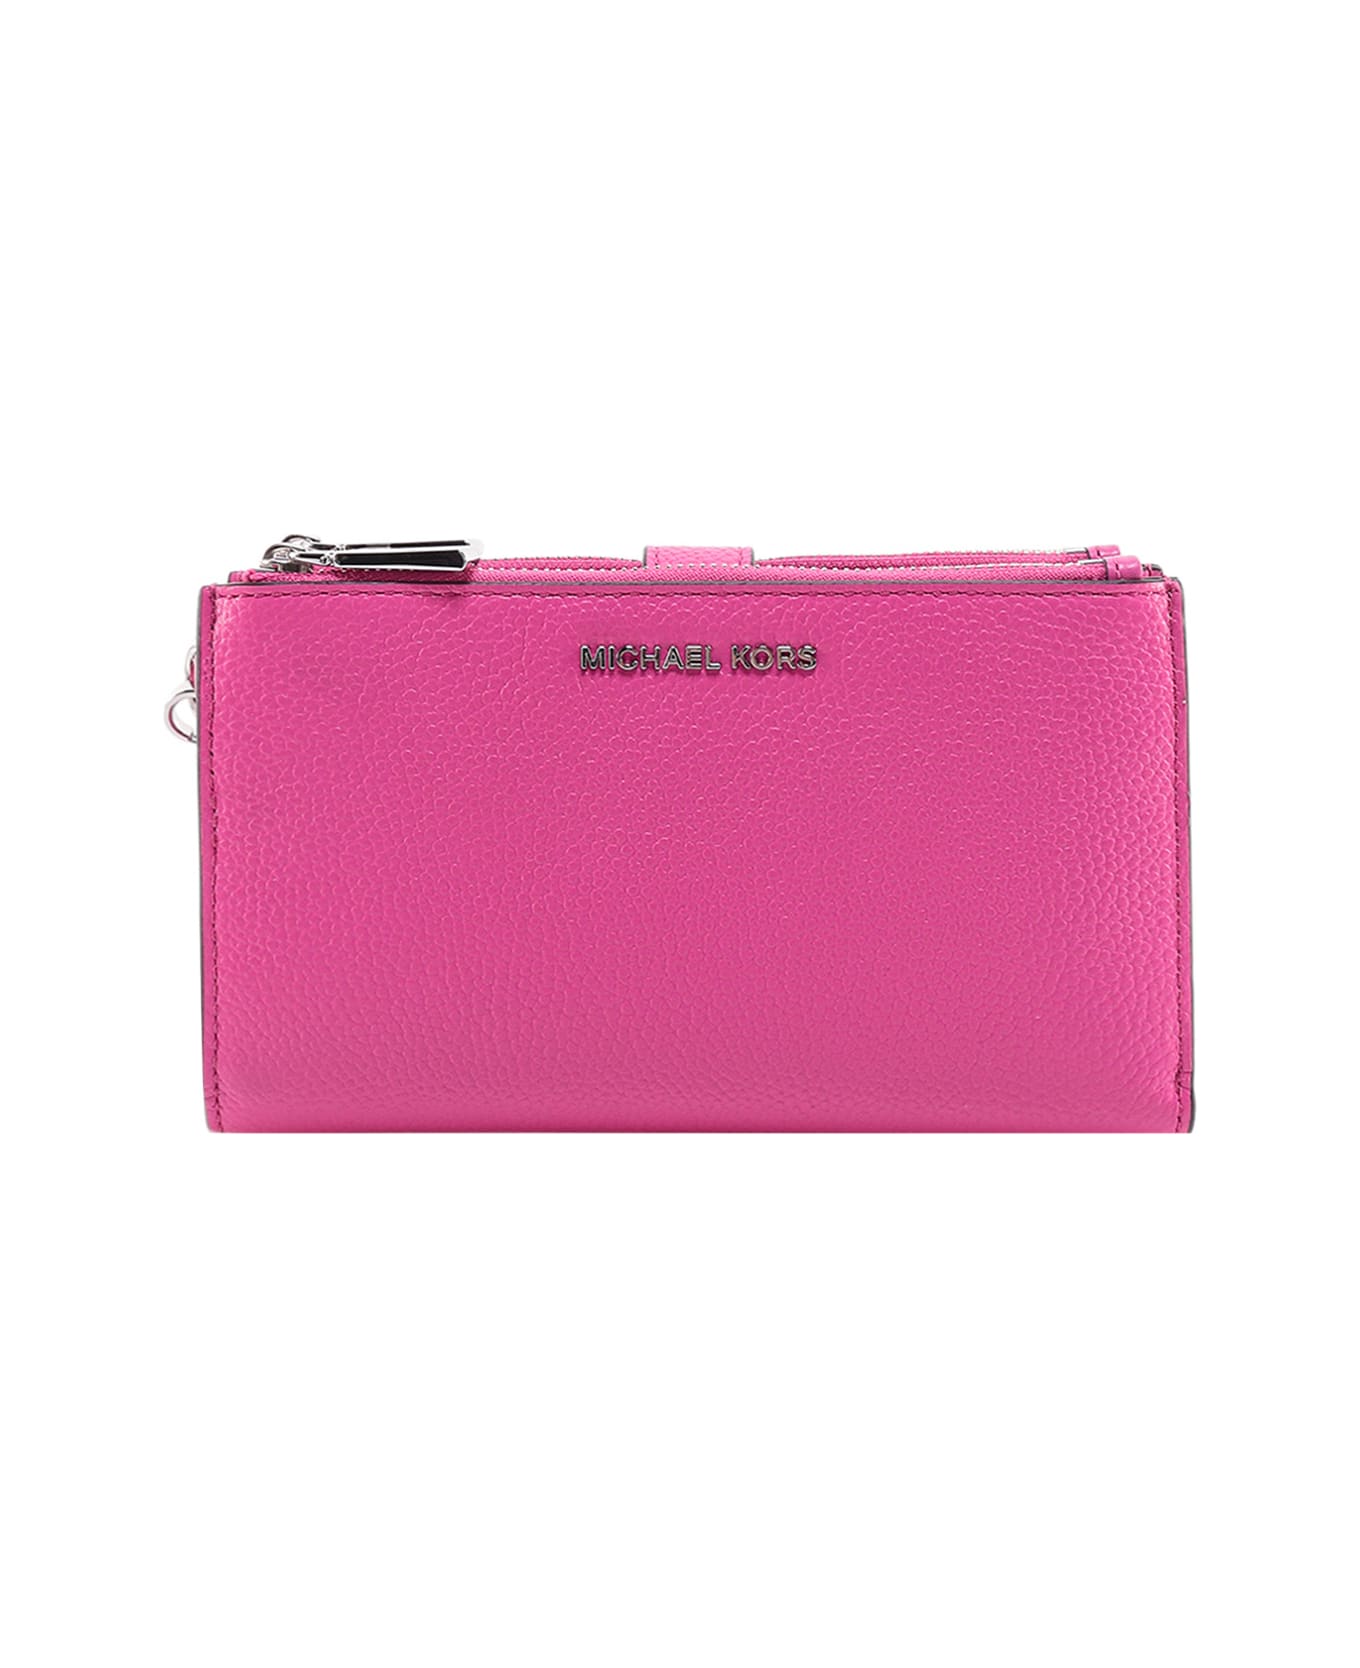 Michael Kors Jet Set Wallet - Pink 財布